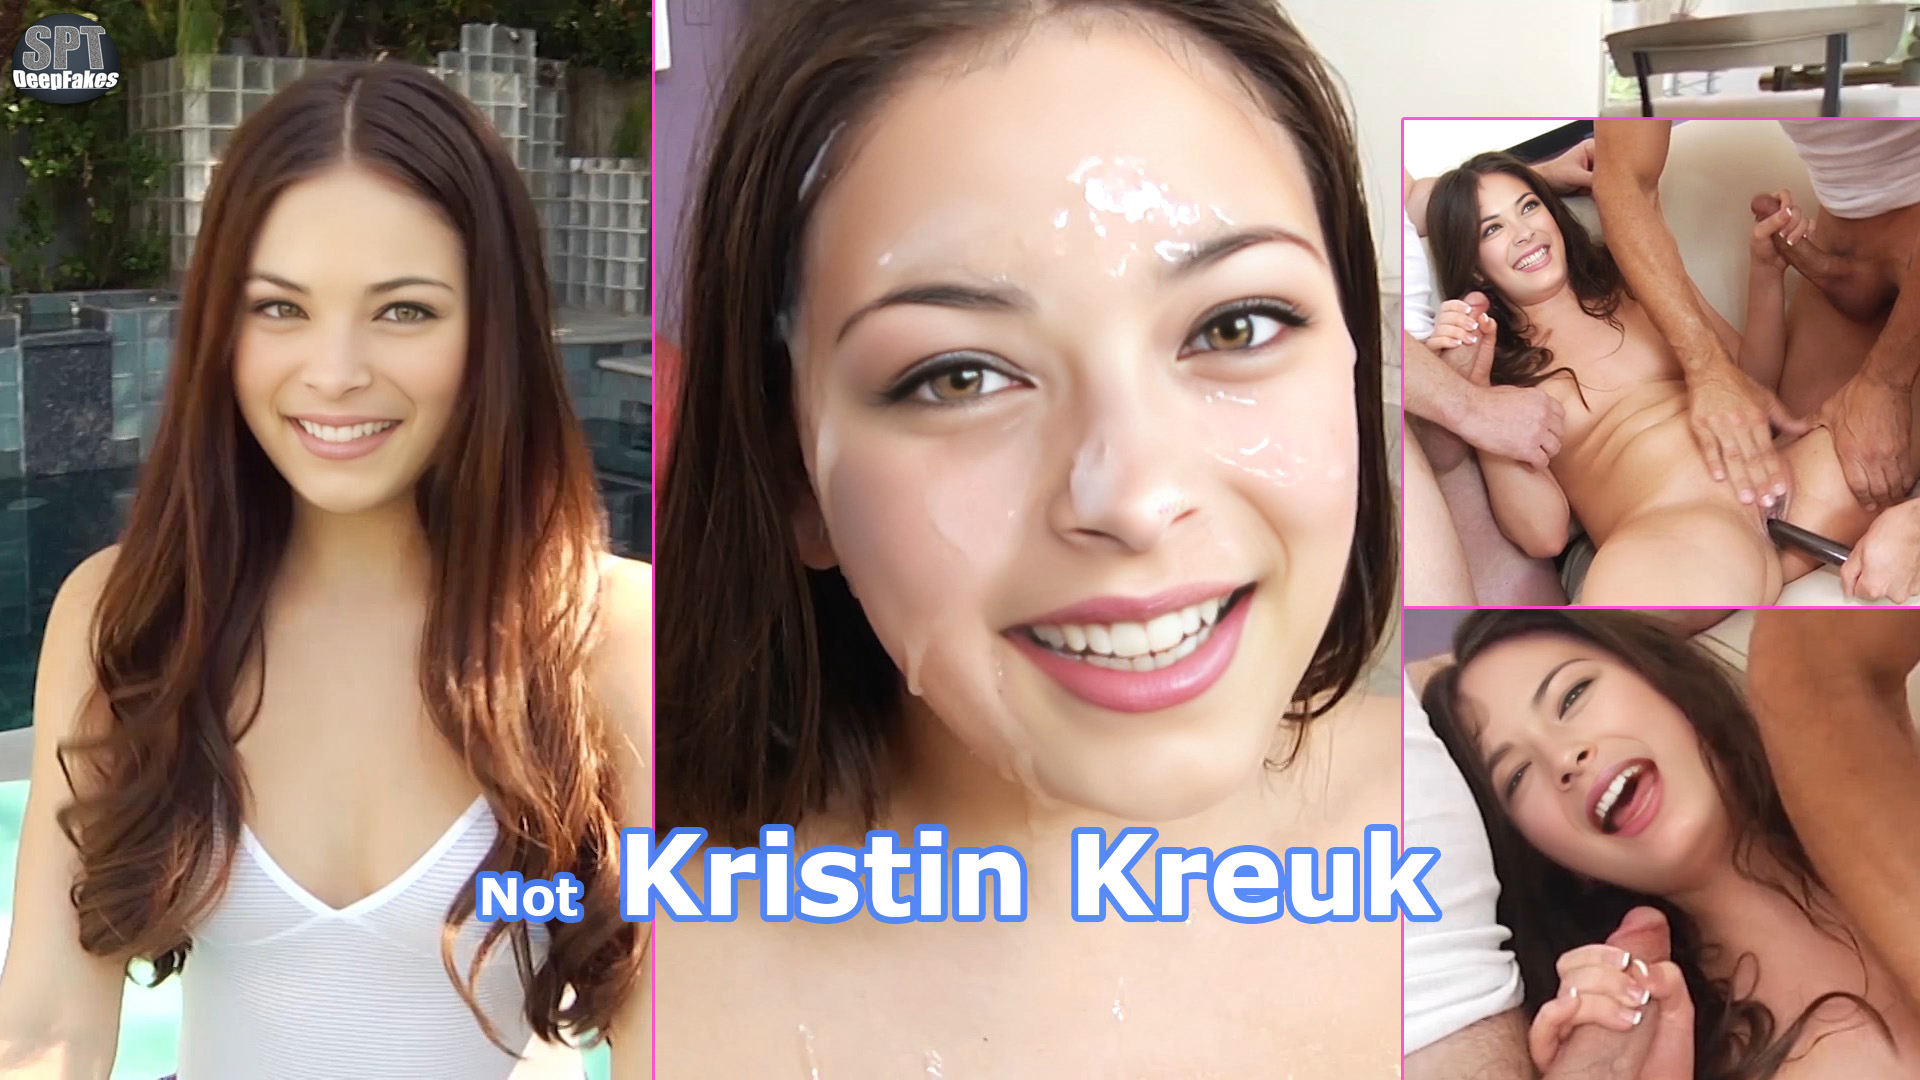 not Kristin Kreuk blowbang bukakke with 6 guys (trailer)